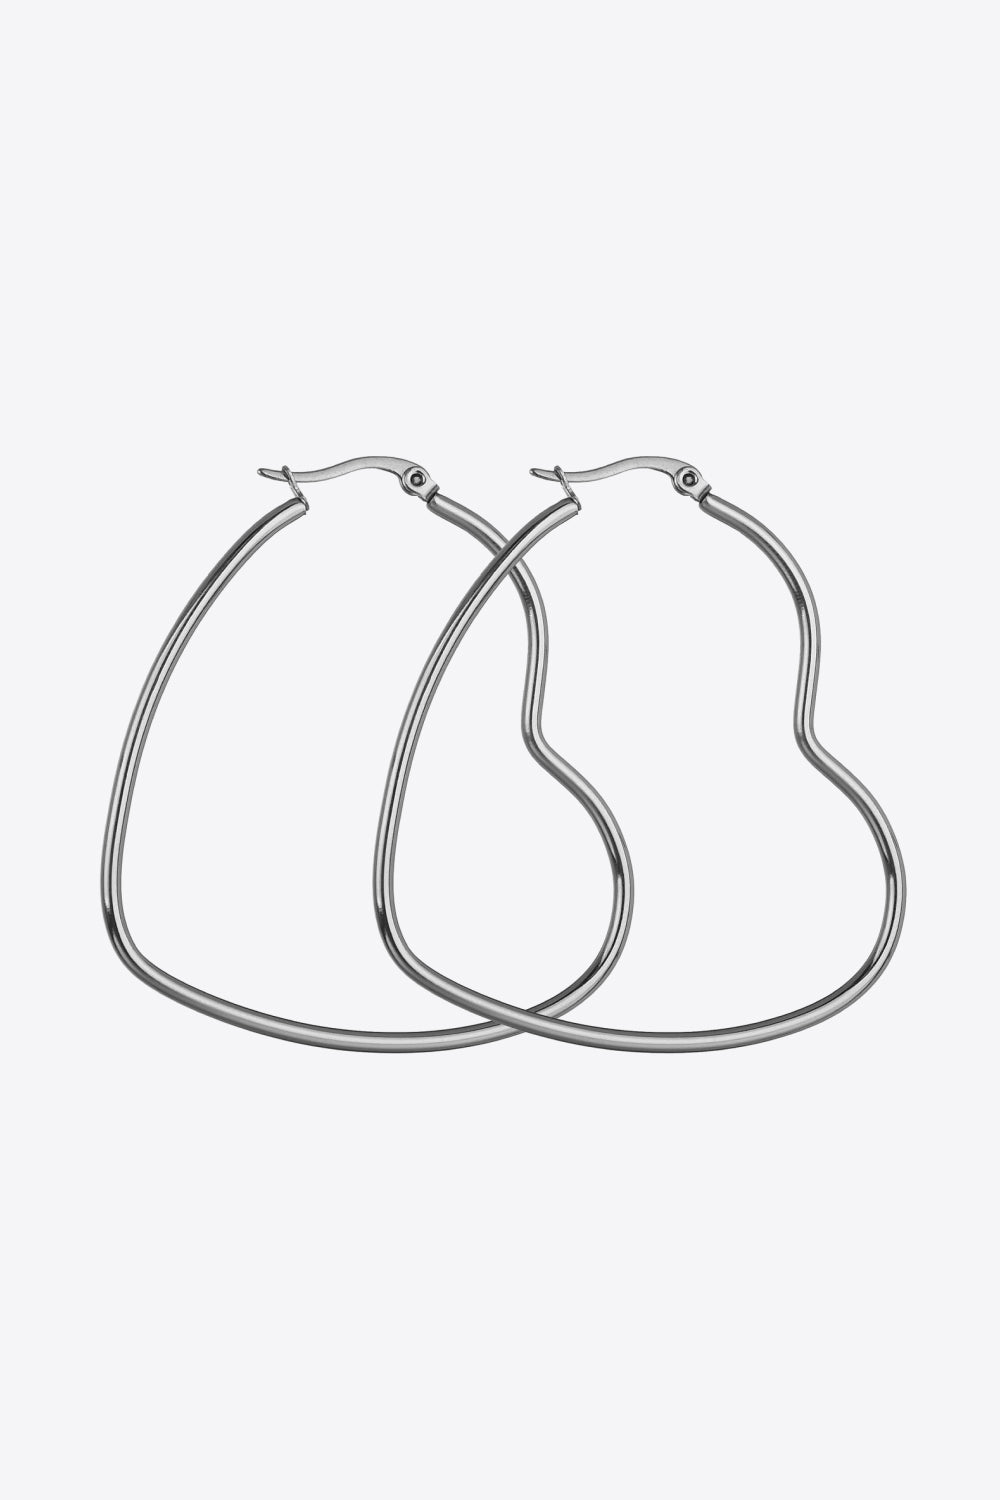 SILVER ONE SIZE - Heart Stainless Steel Earrings - earrings at TFC&H Co.